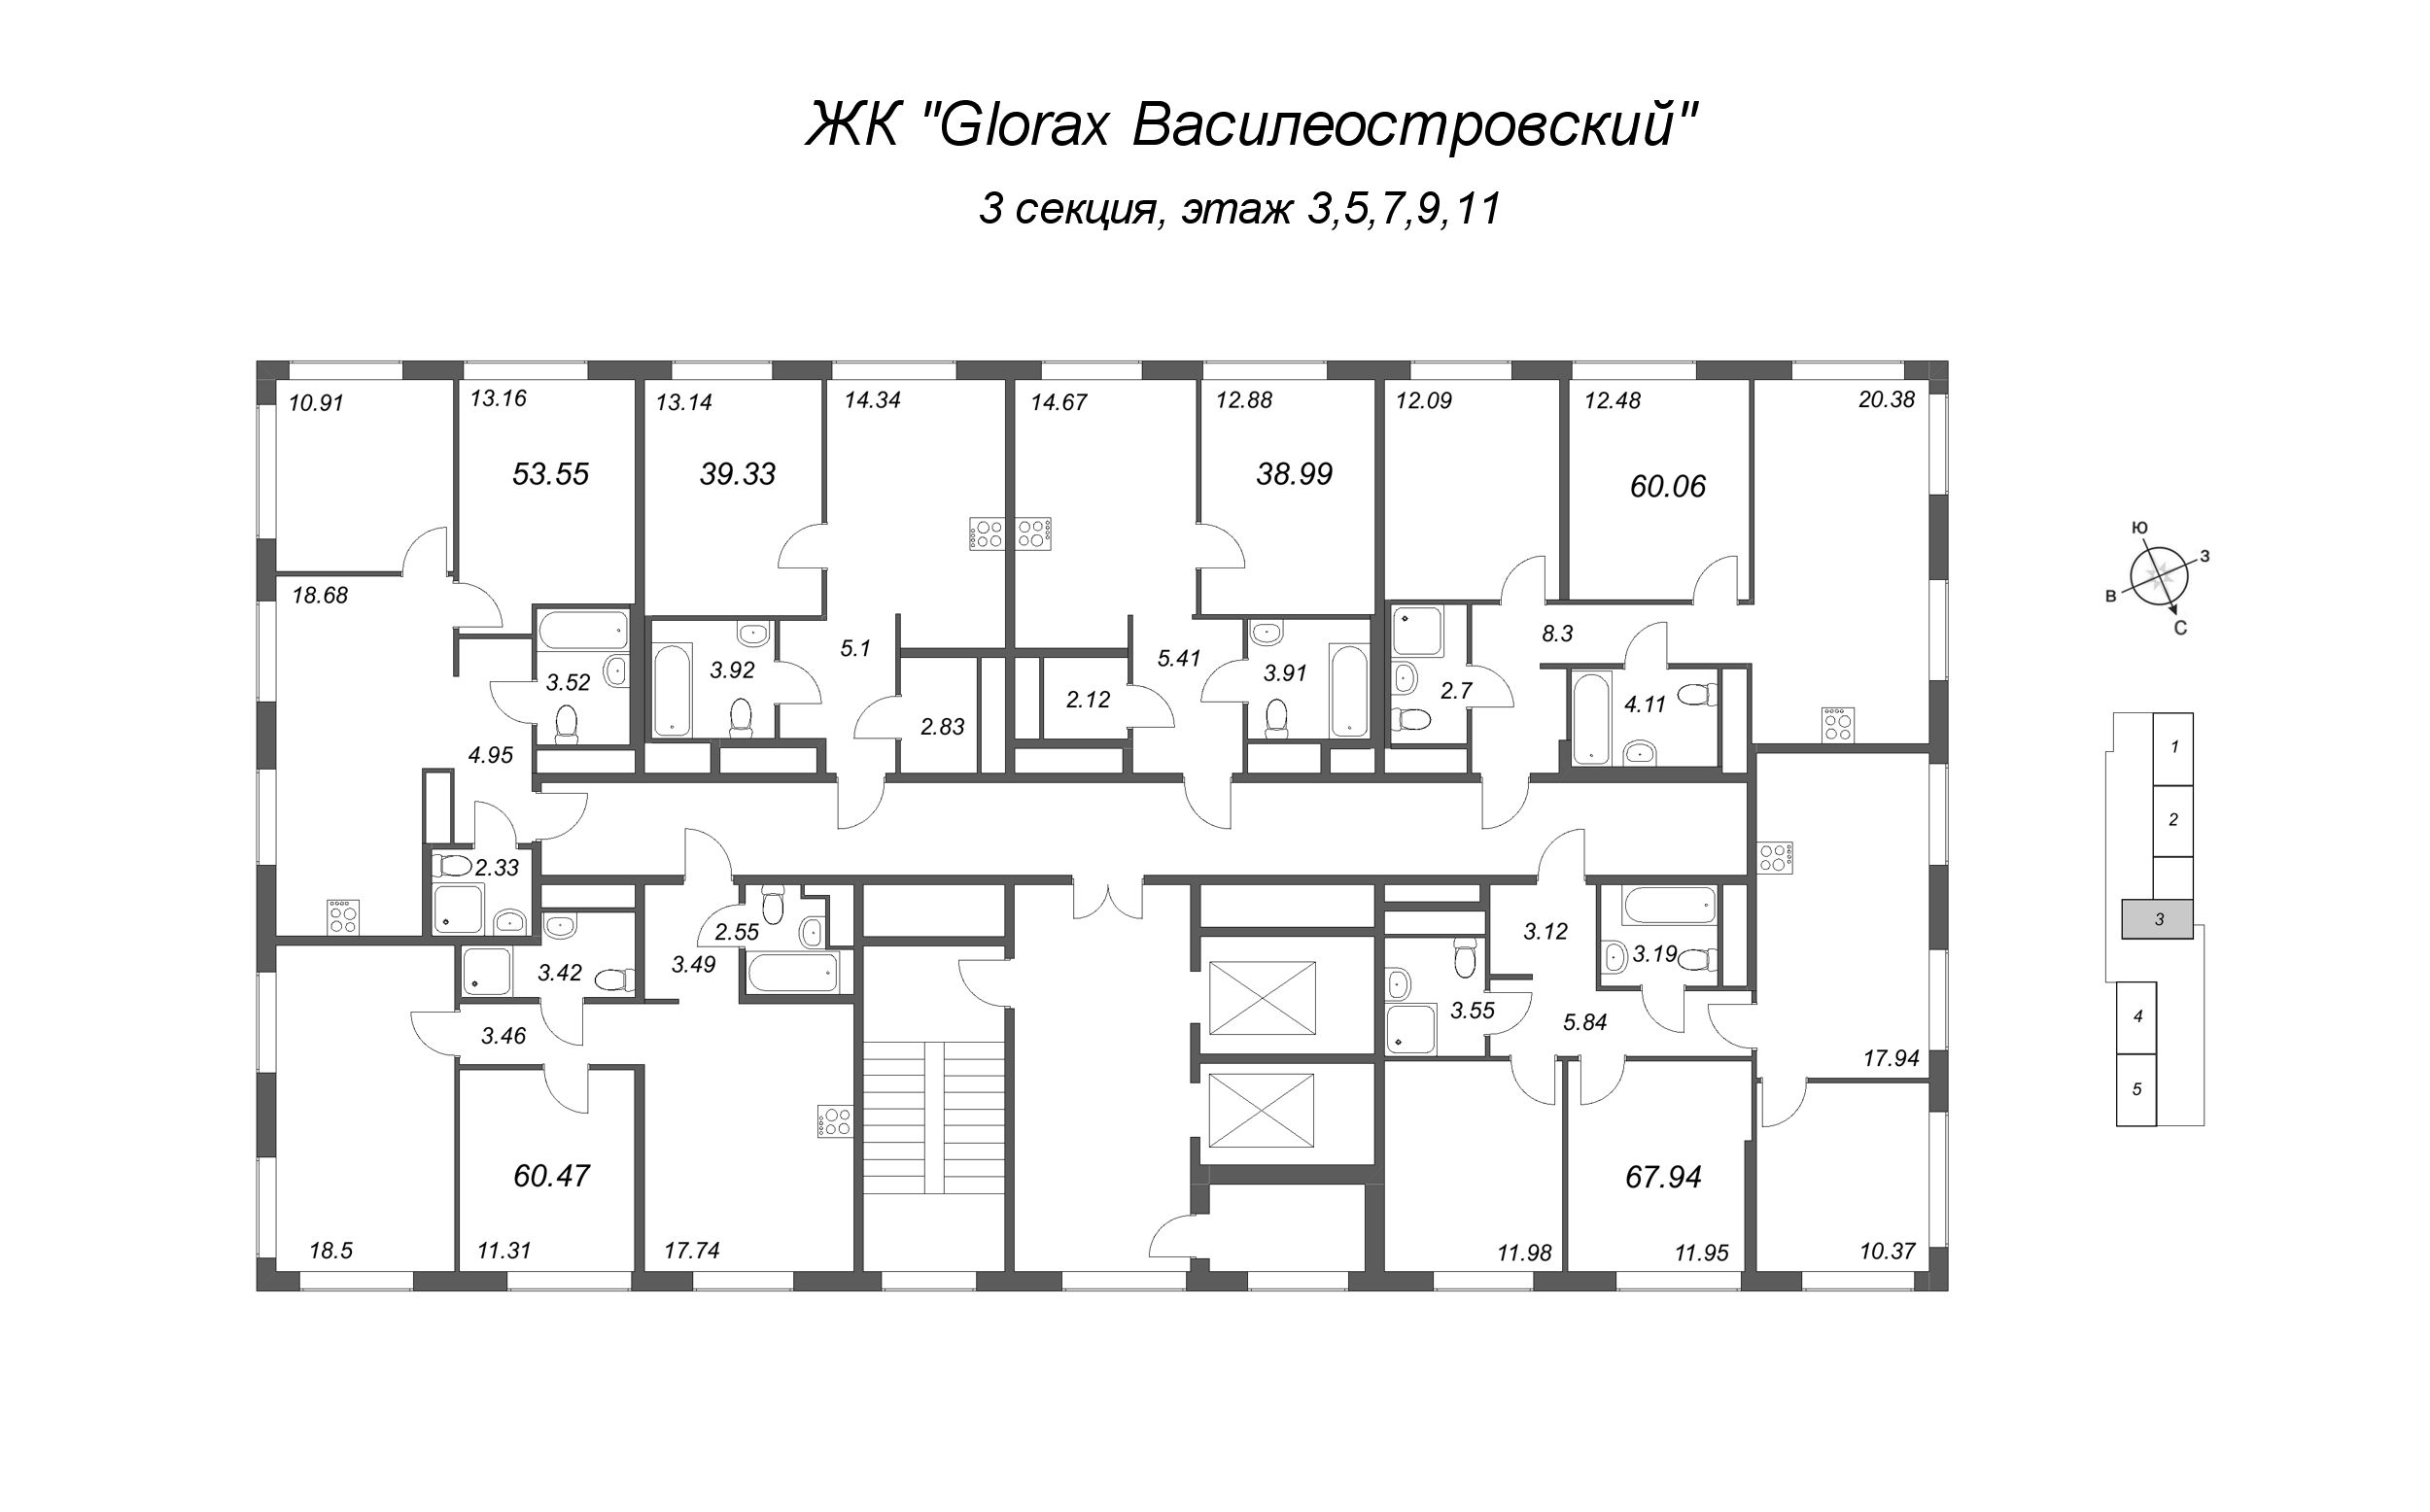 4-комнатная (Евро) квартира, 67.94 м² - планировка этажа